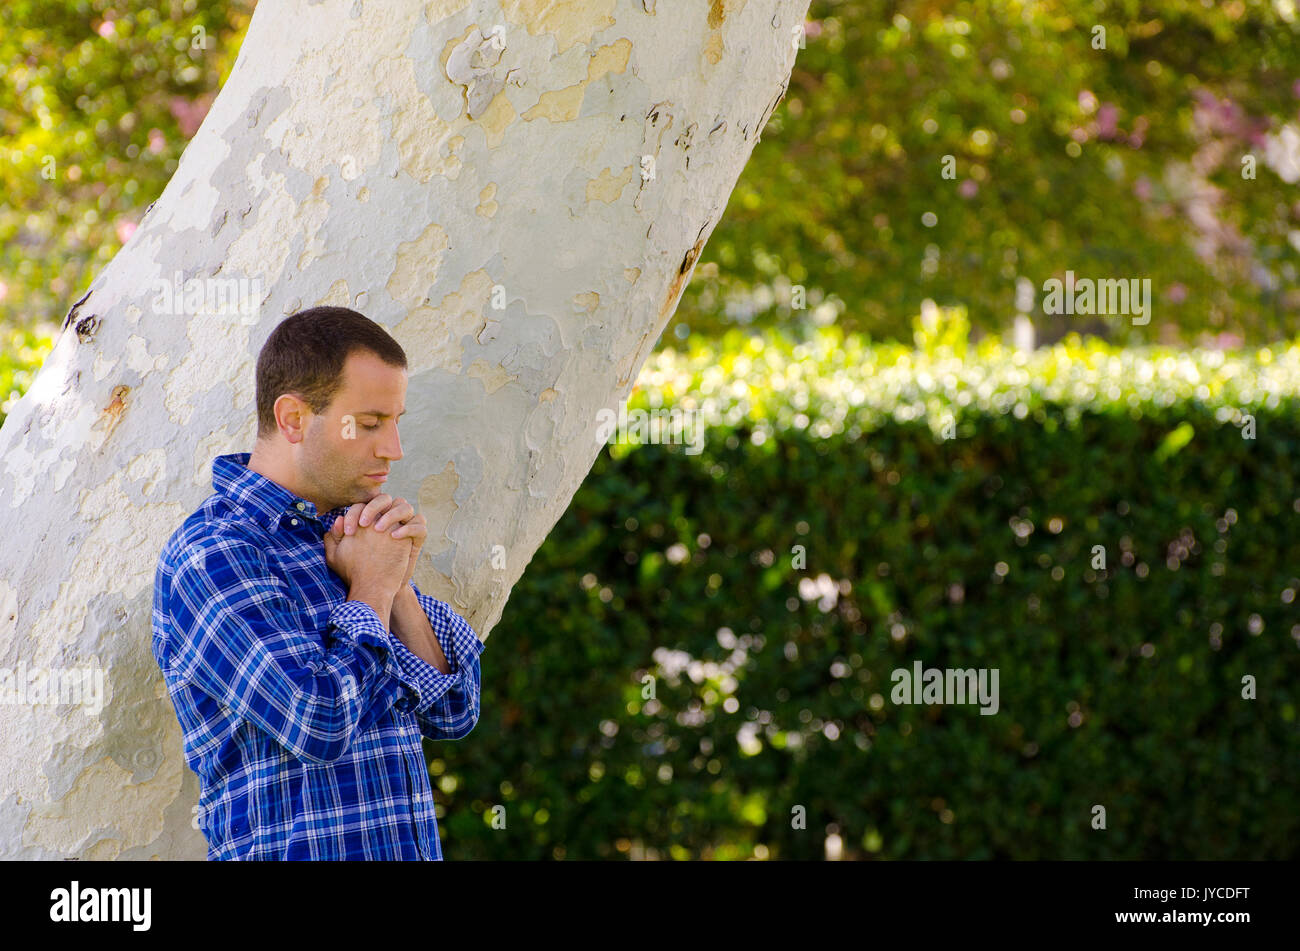 Man praying alone outside by a tree trunk. Stock Photo